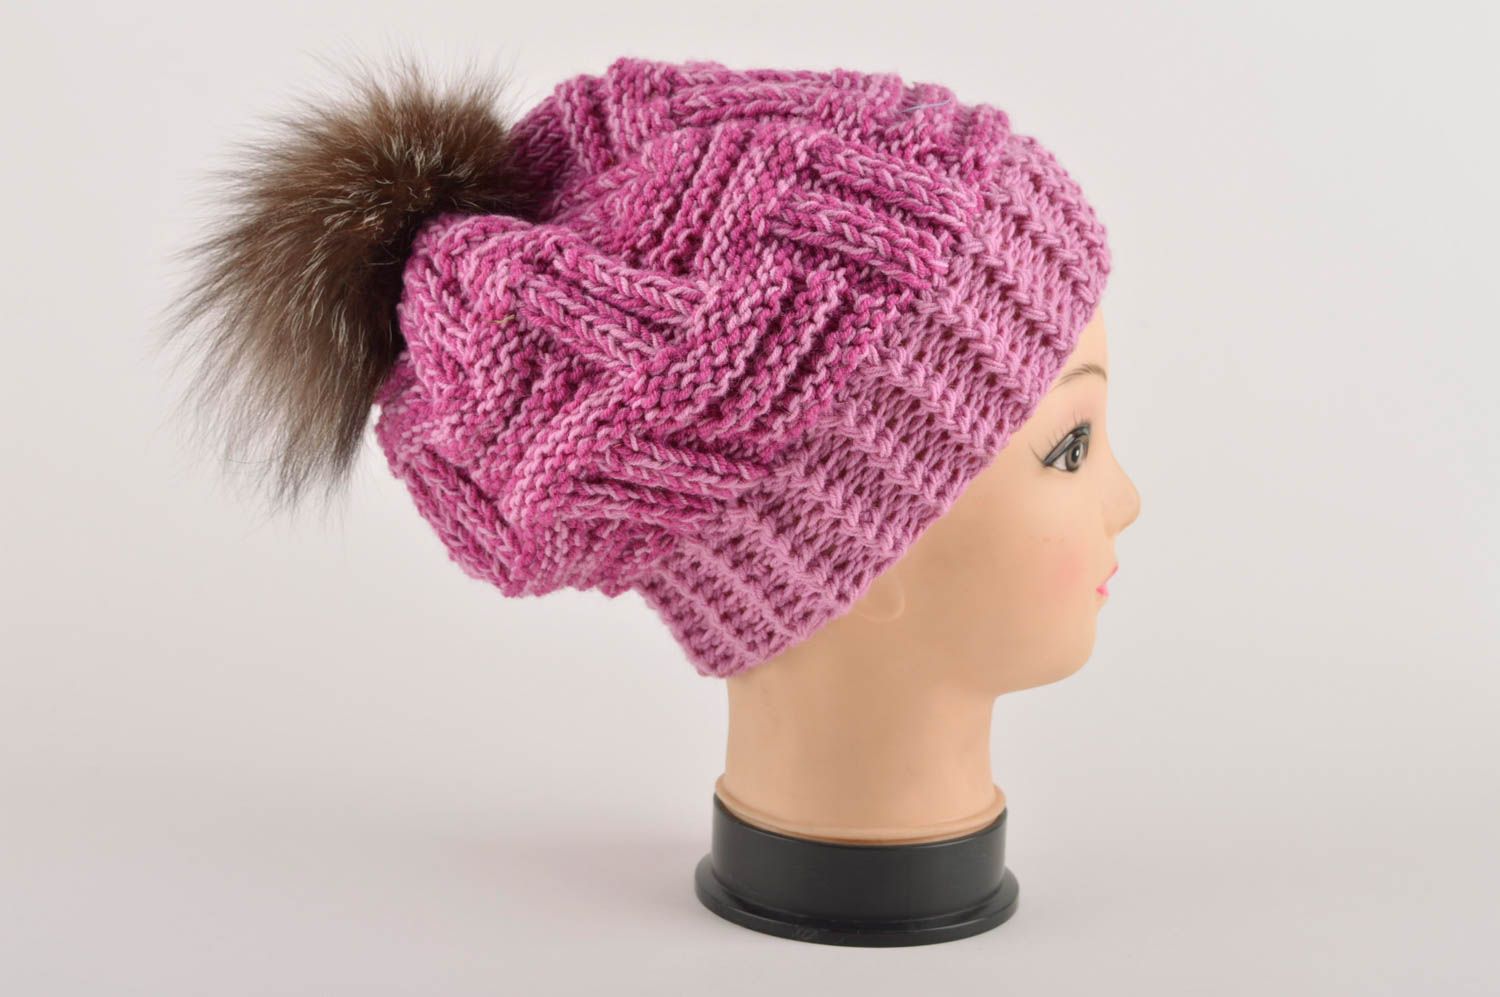 Handmade winter hat unusual hat for girls woolen hat winter hat gift ideas photo 4